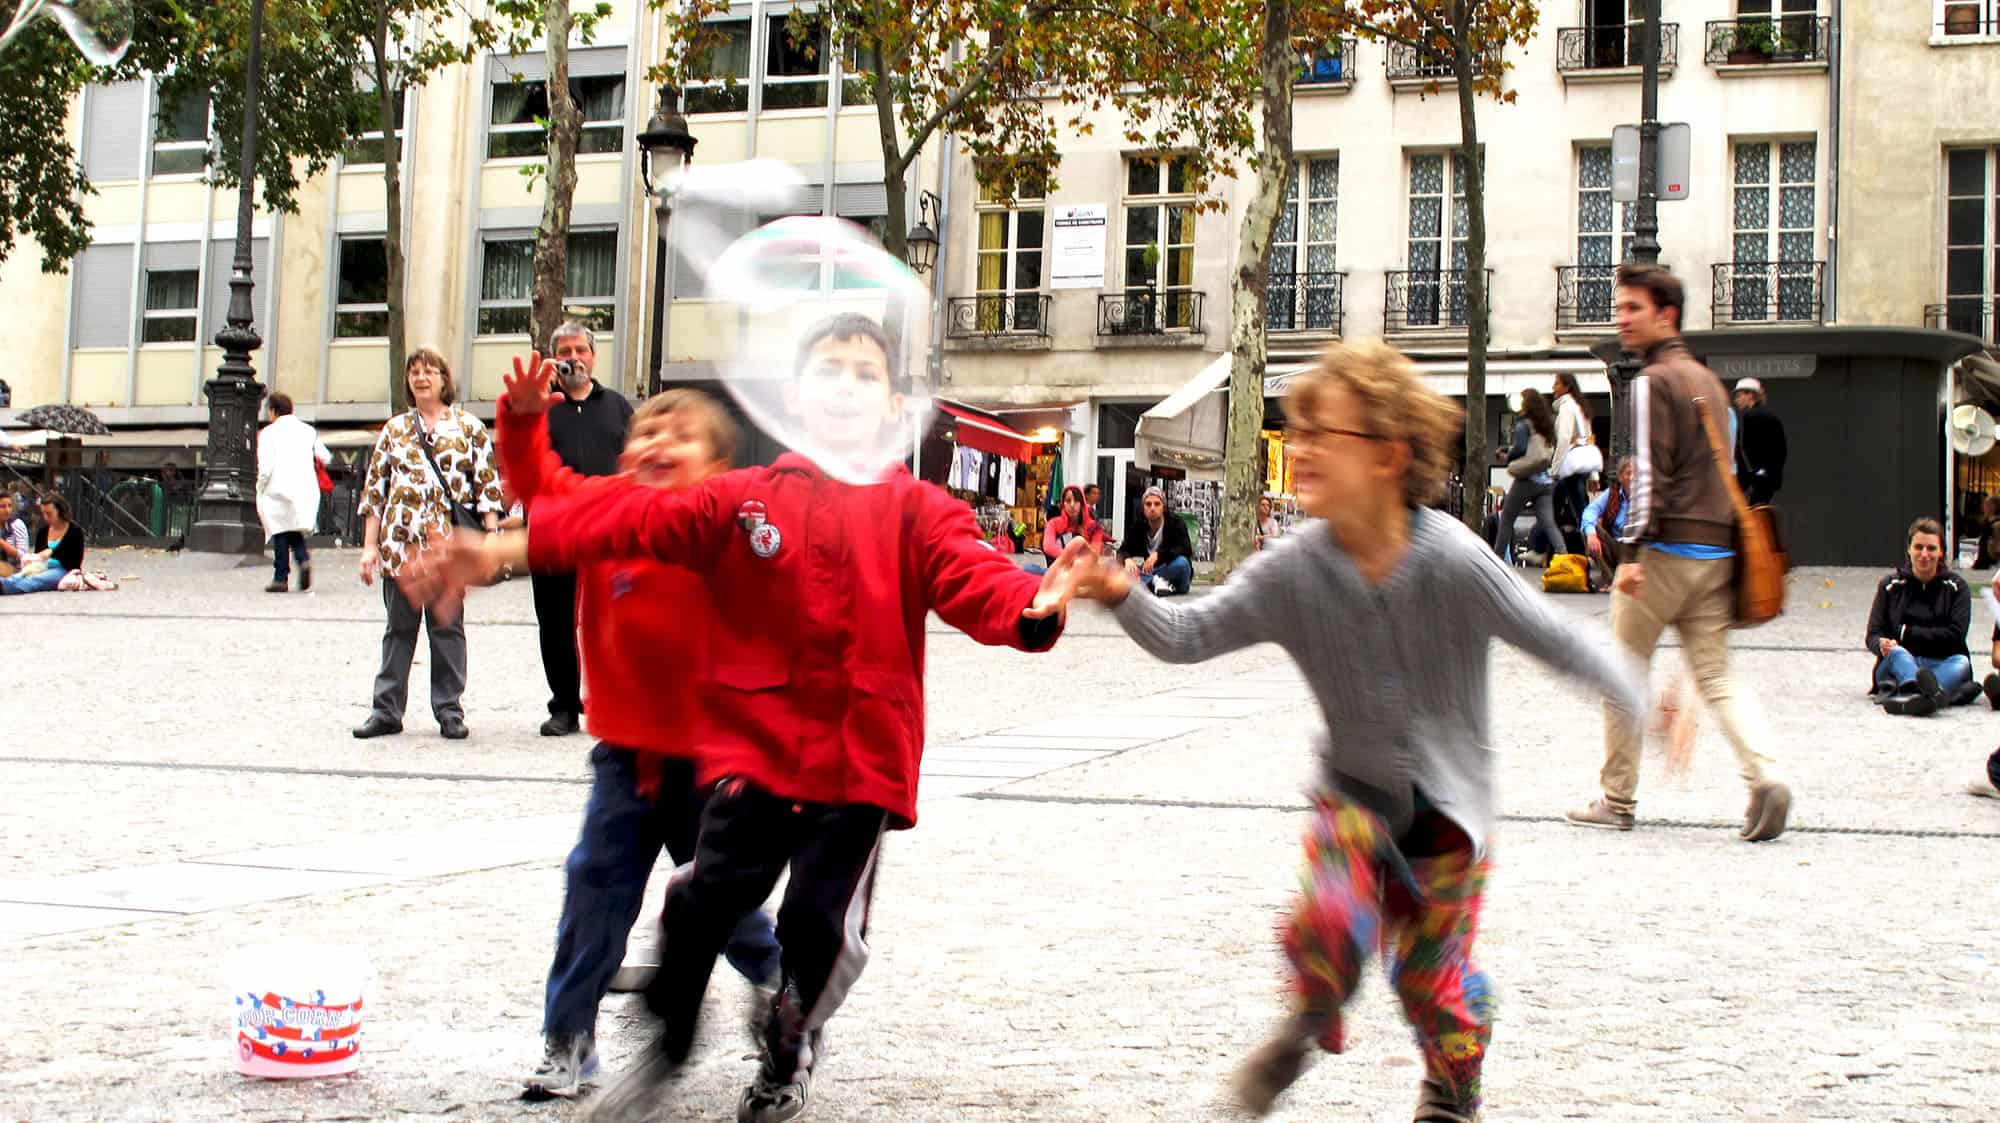 Cheap activities for kids in Paris